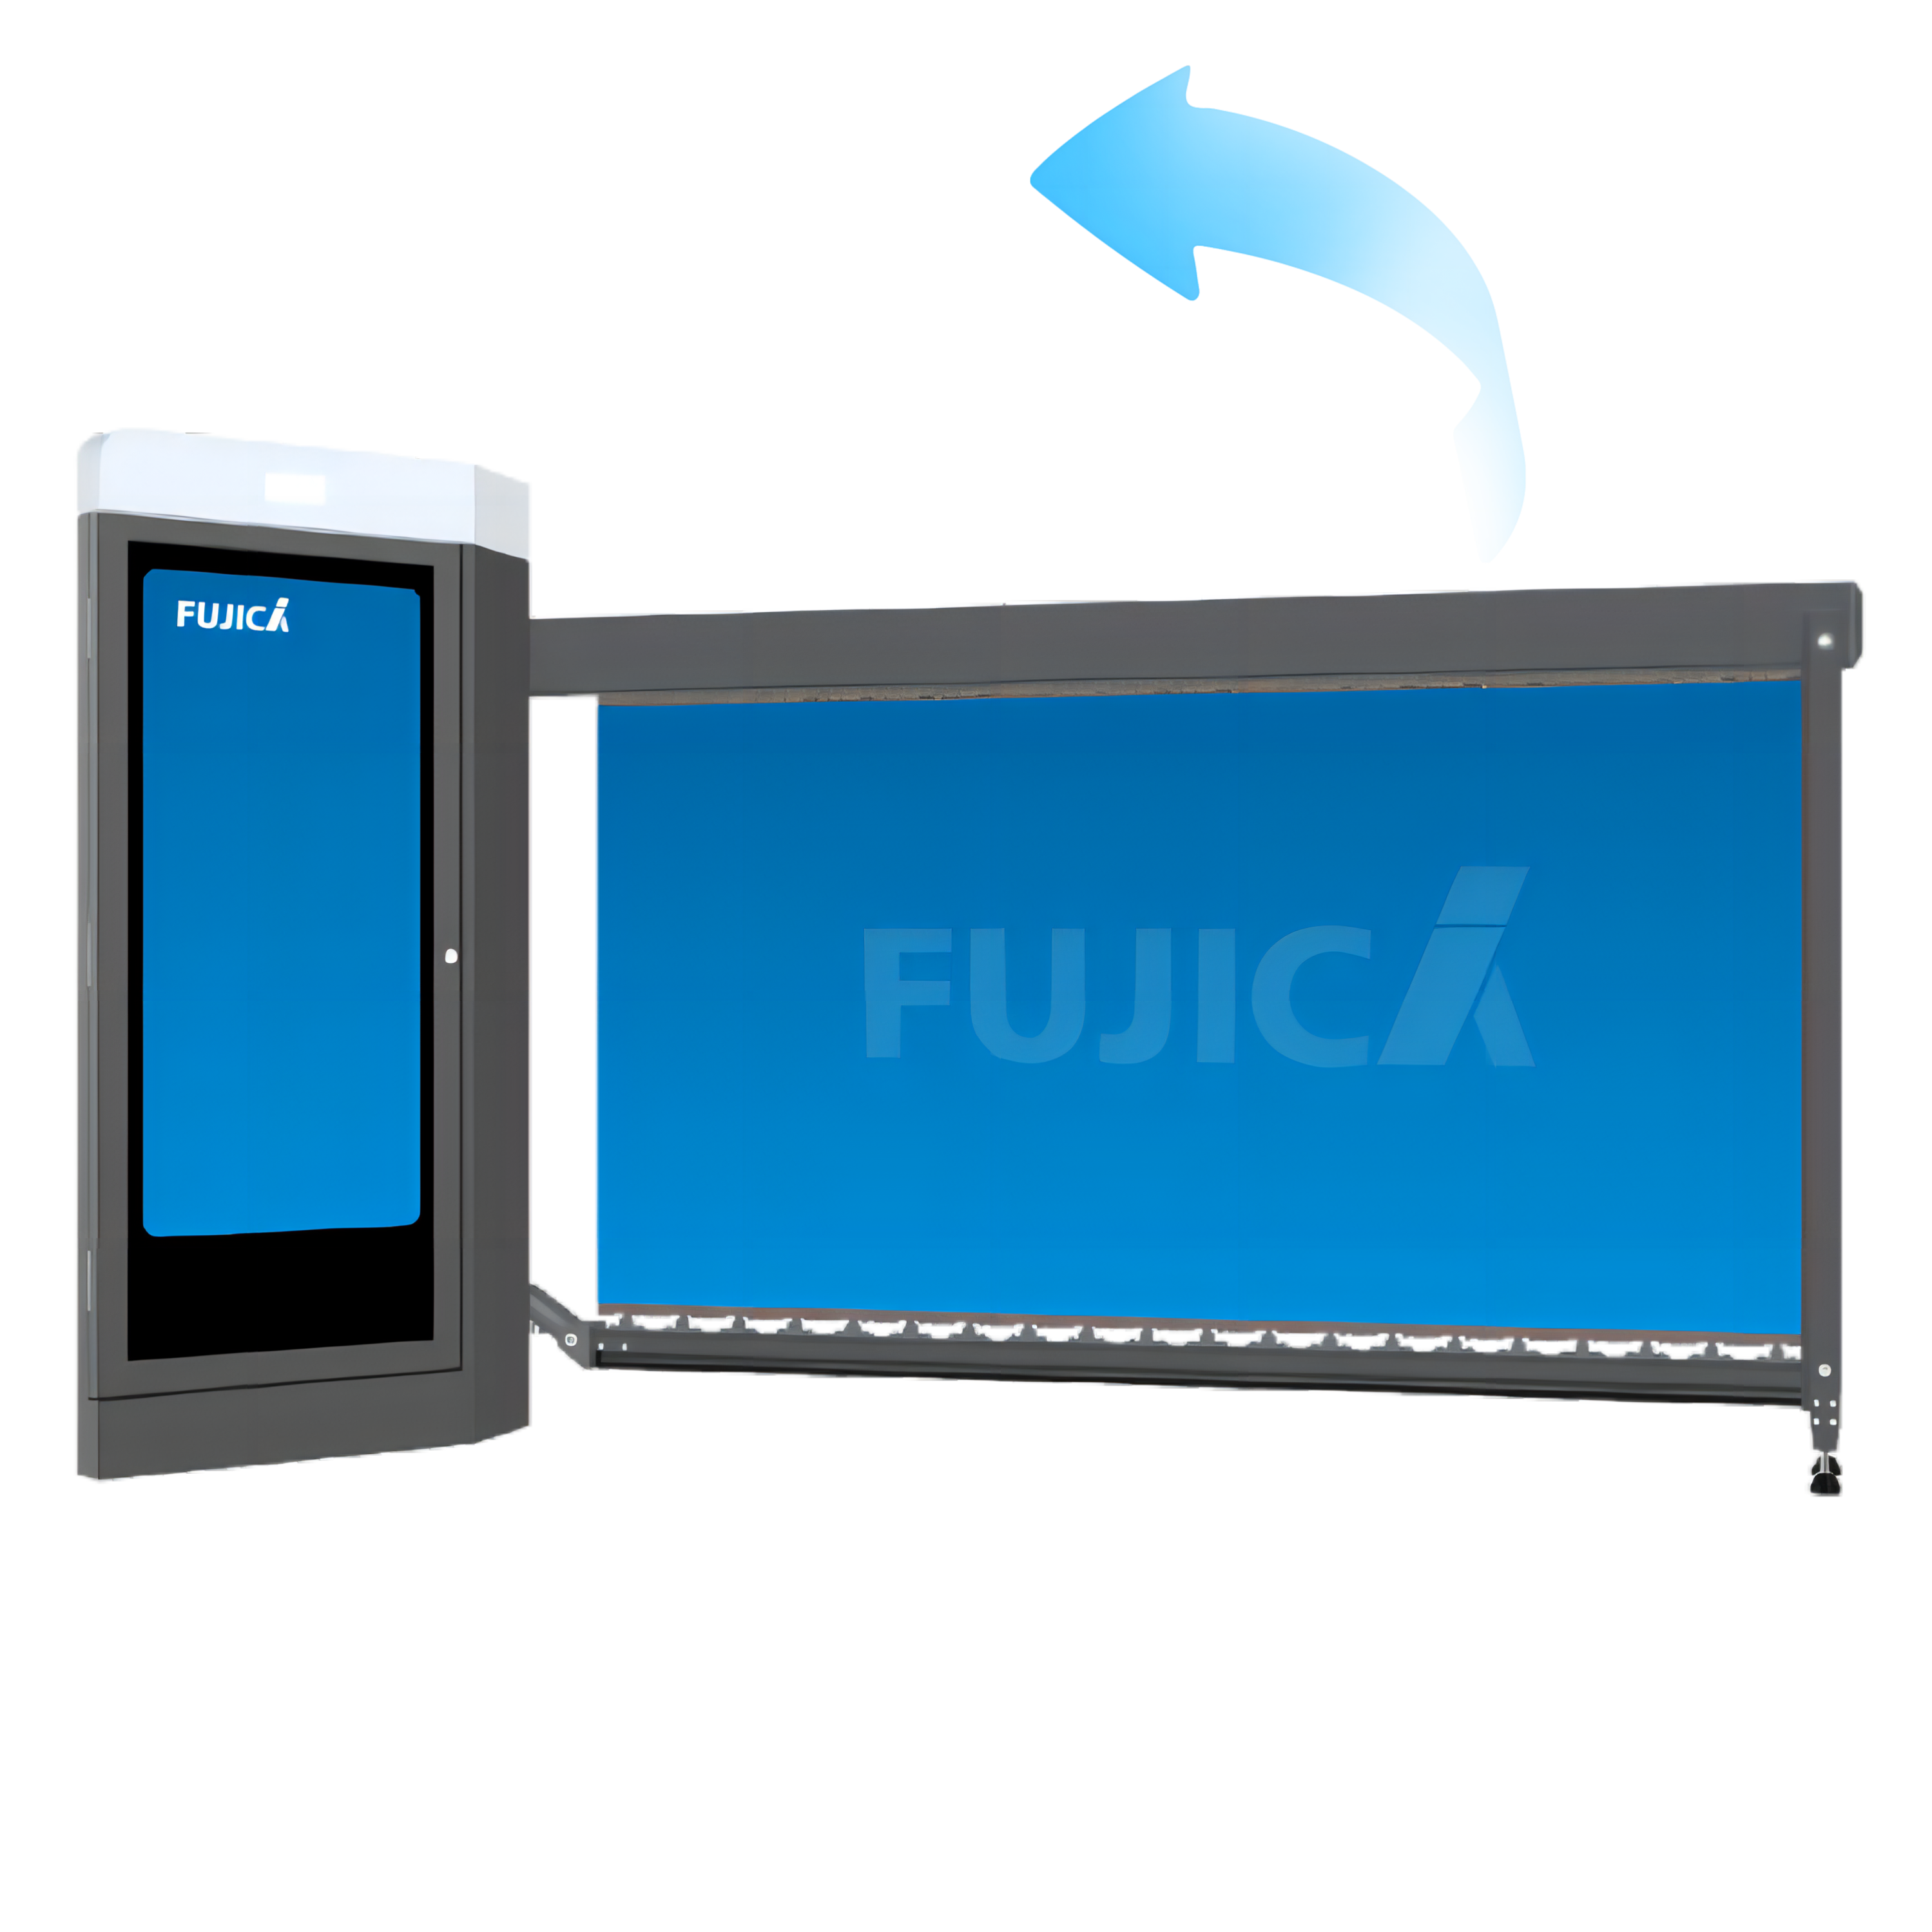 Advertising Barrier Gate FJC-D420K-Global Access Control System Turnstile Gate Supplier-FUJICA SYSTEM
